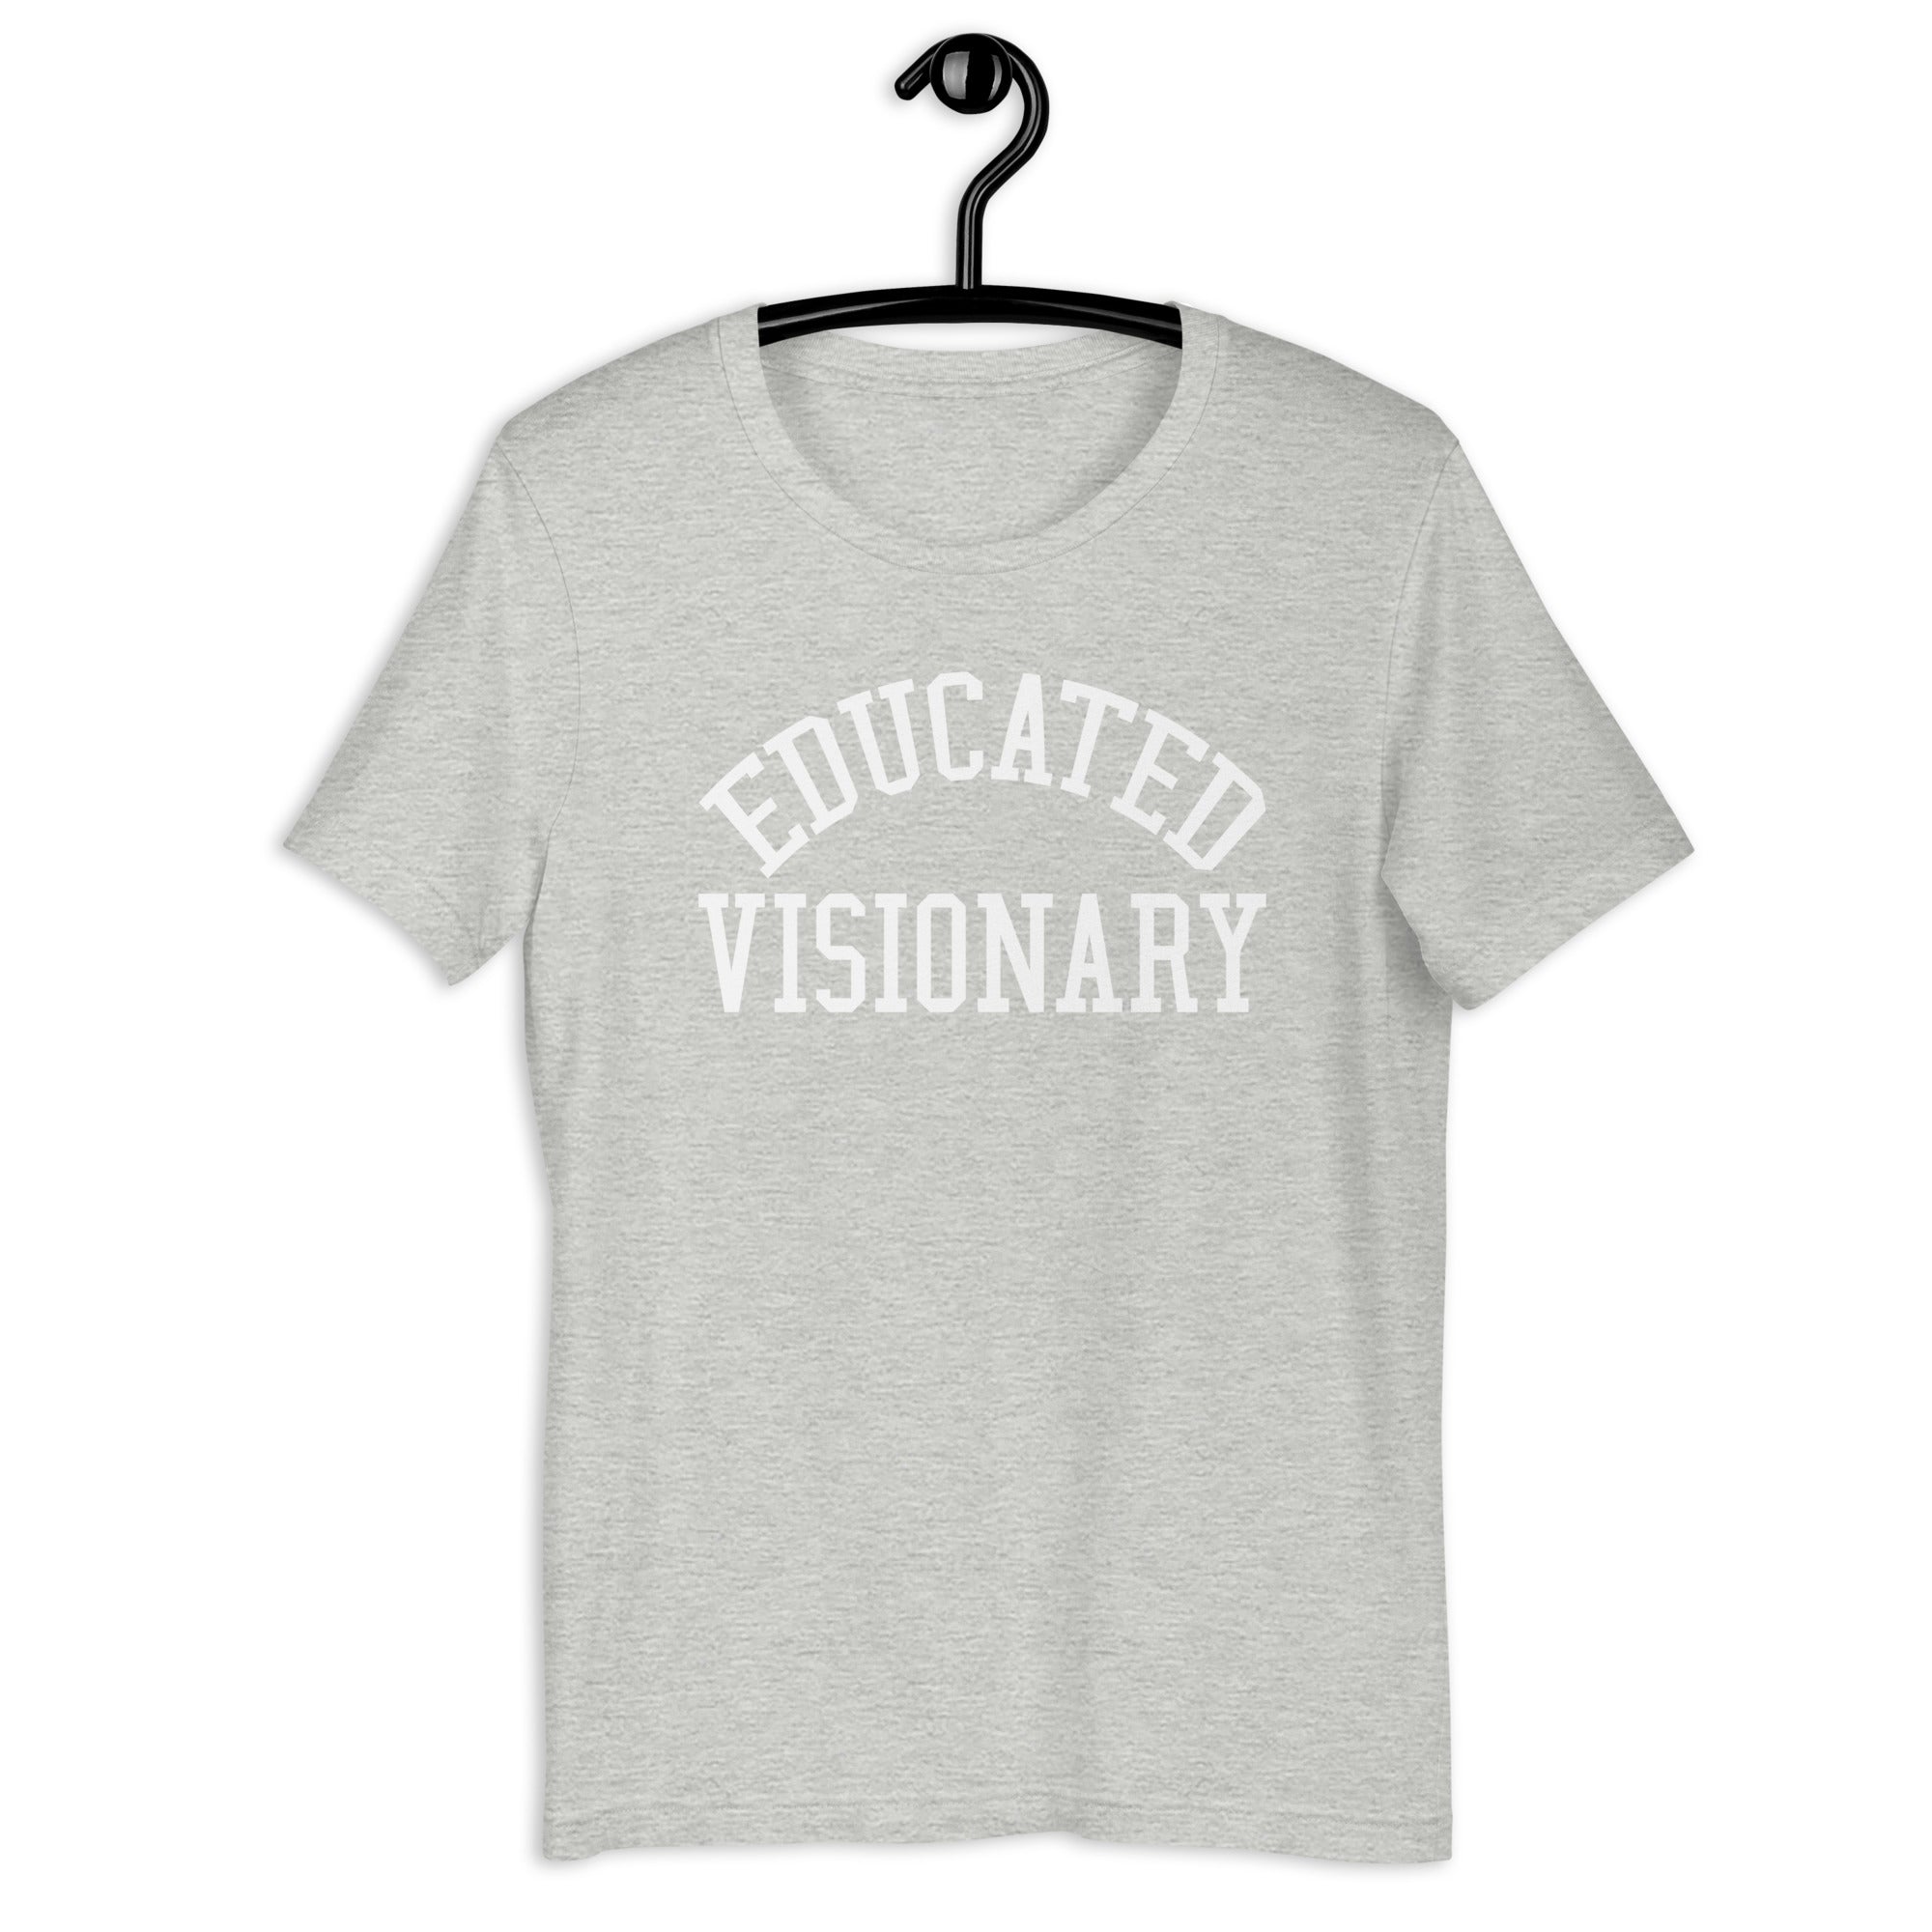 Unisex t-shirt | Educated Visionary